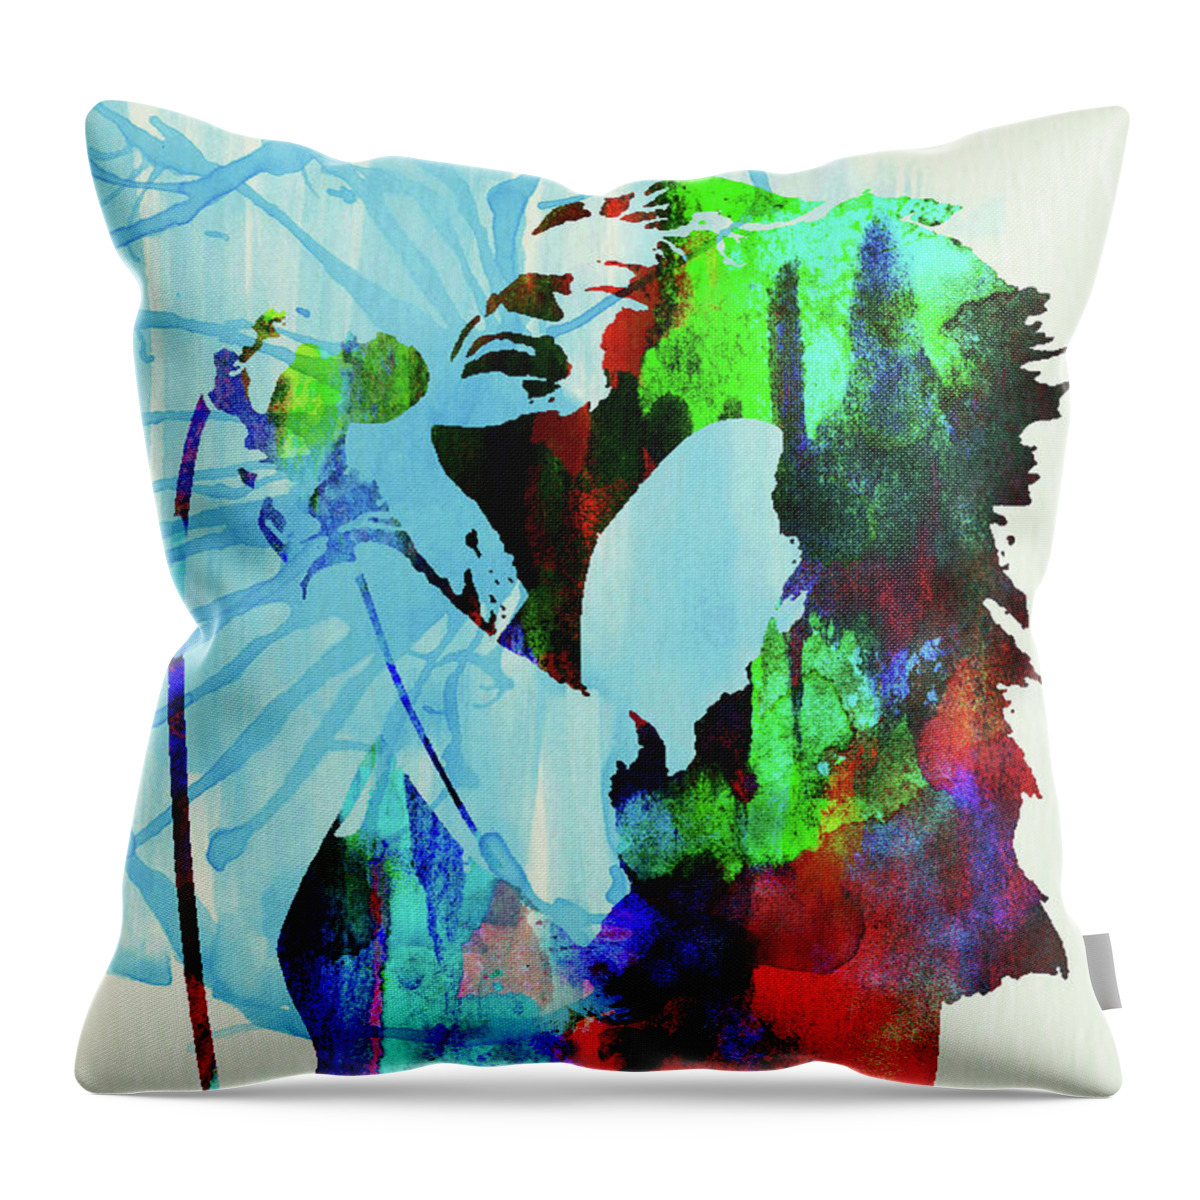 Janis Joplin Throw Pillow featuring the mixed media Legendary Janis Joplin Watercolor by Naxart Studio